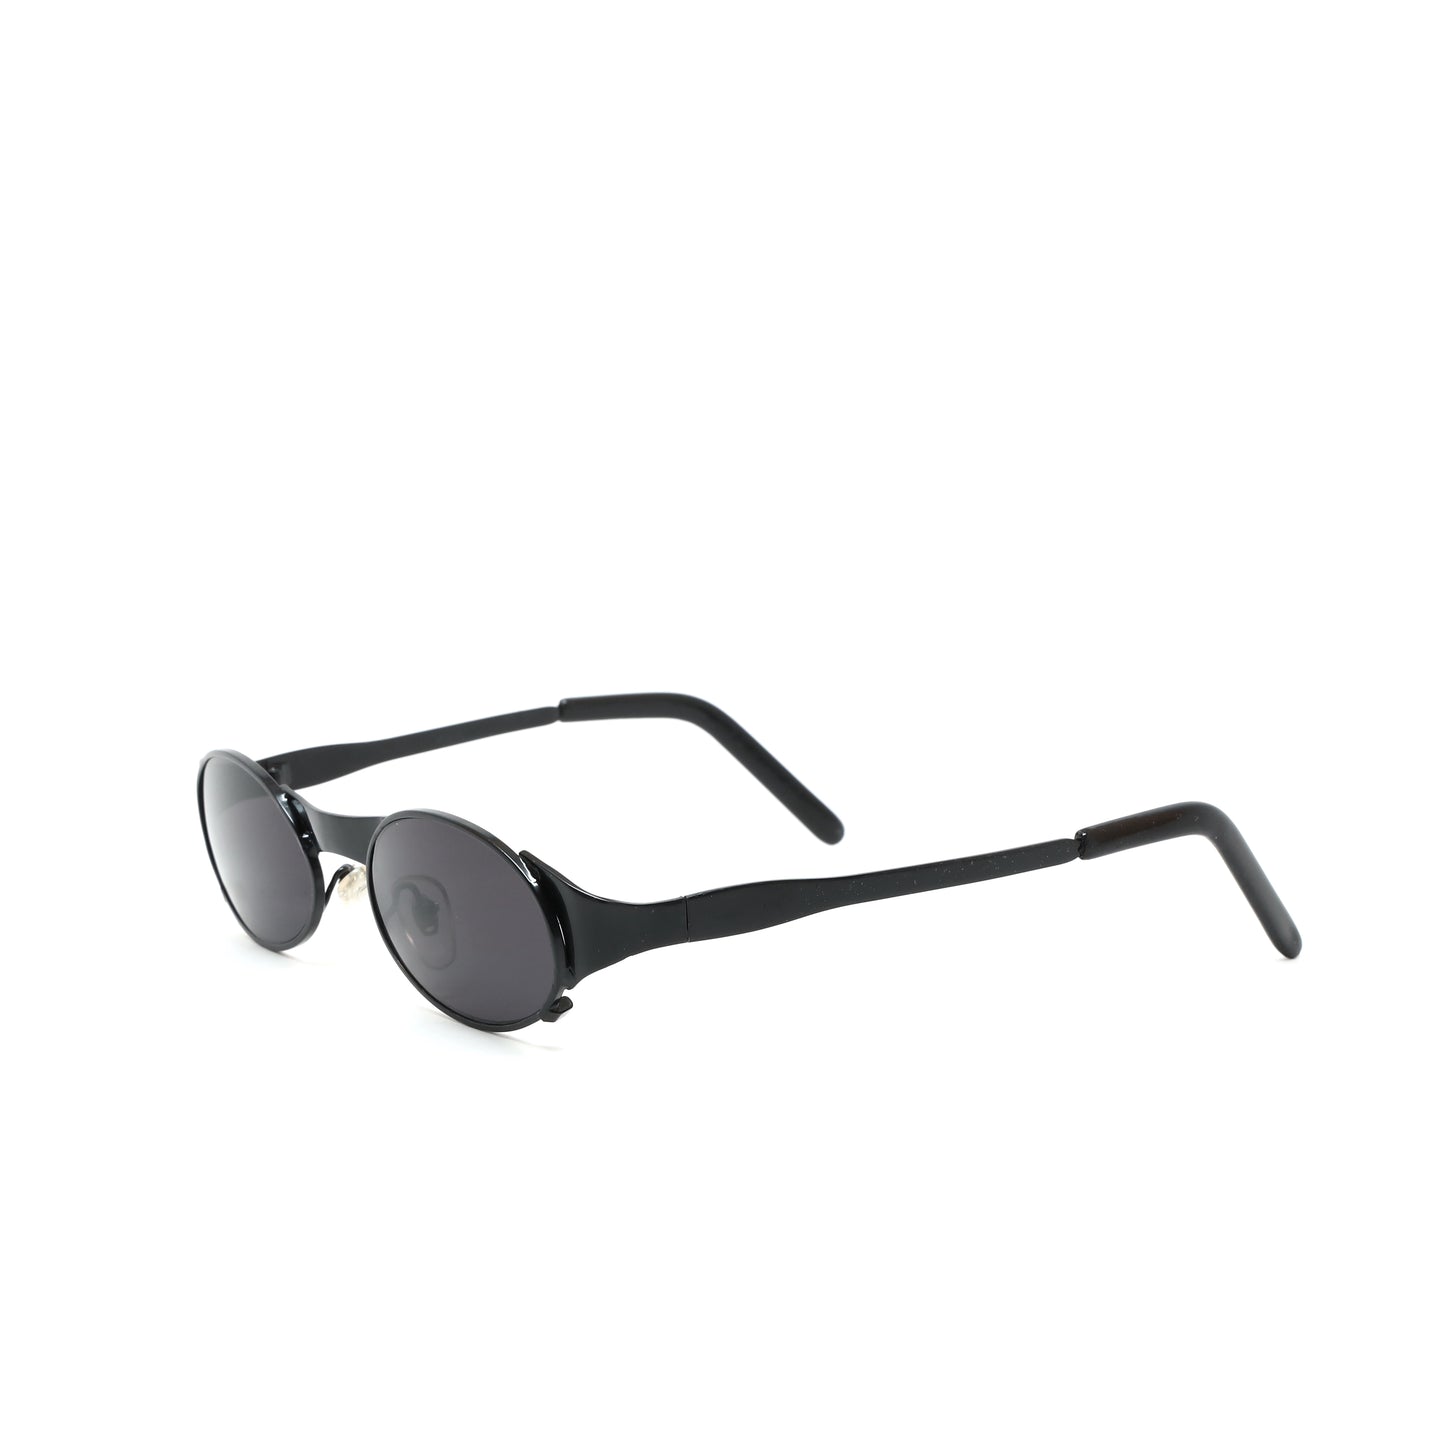 Vintage 90s New Old Stock Industrial Round Steel Frame Sunglasses - Black